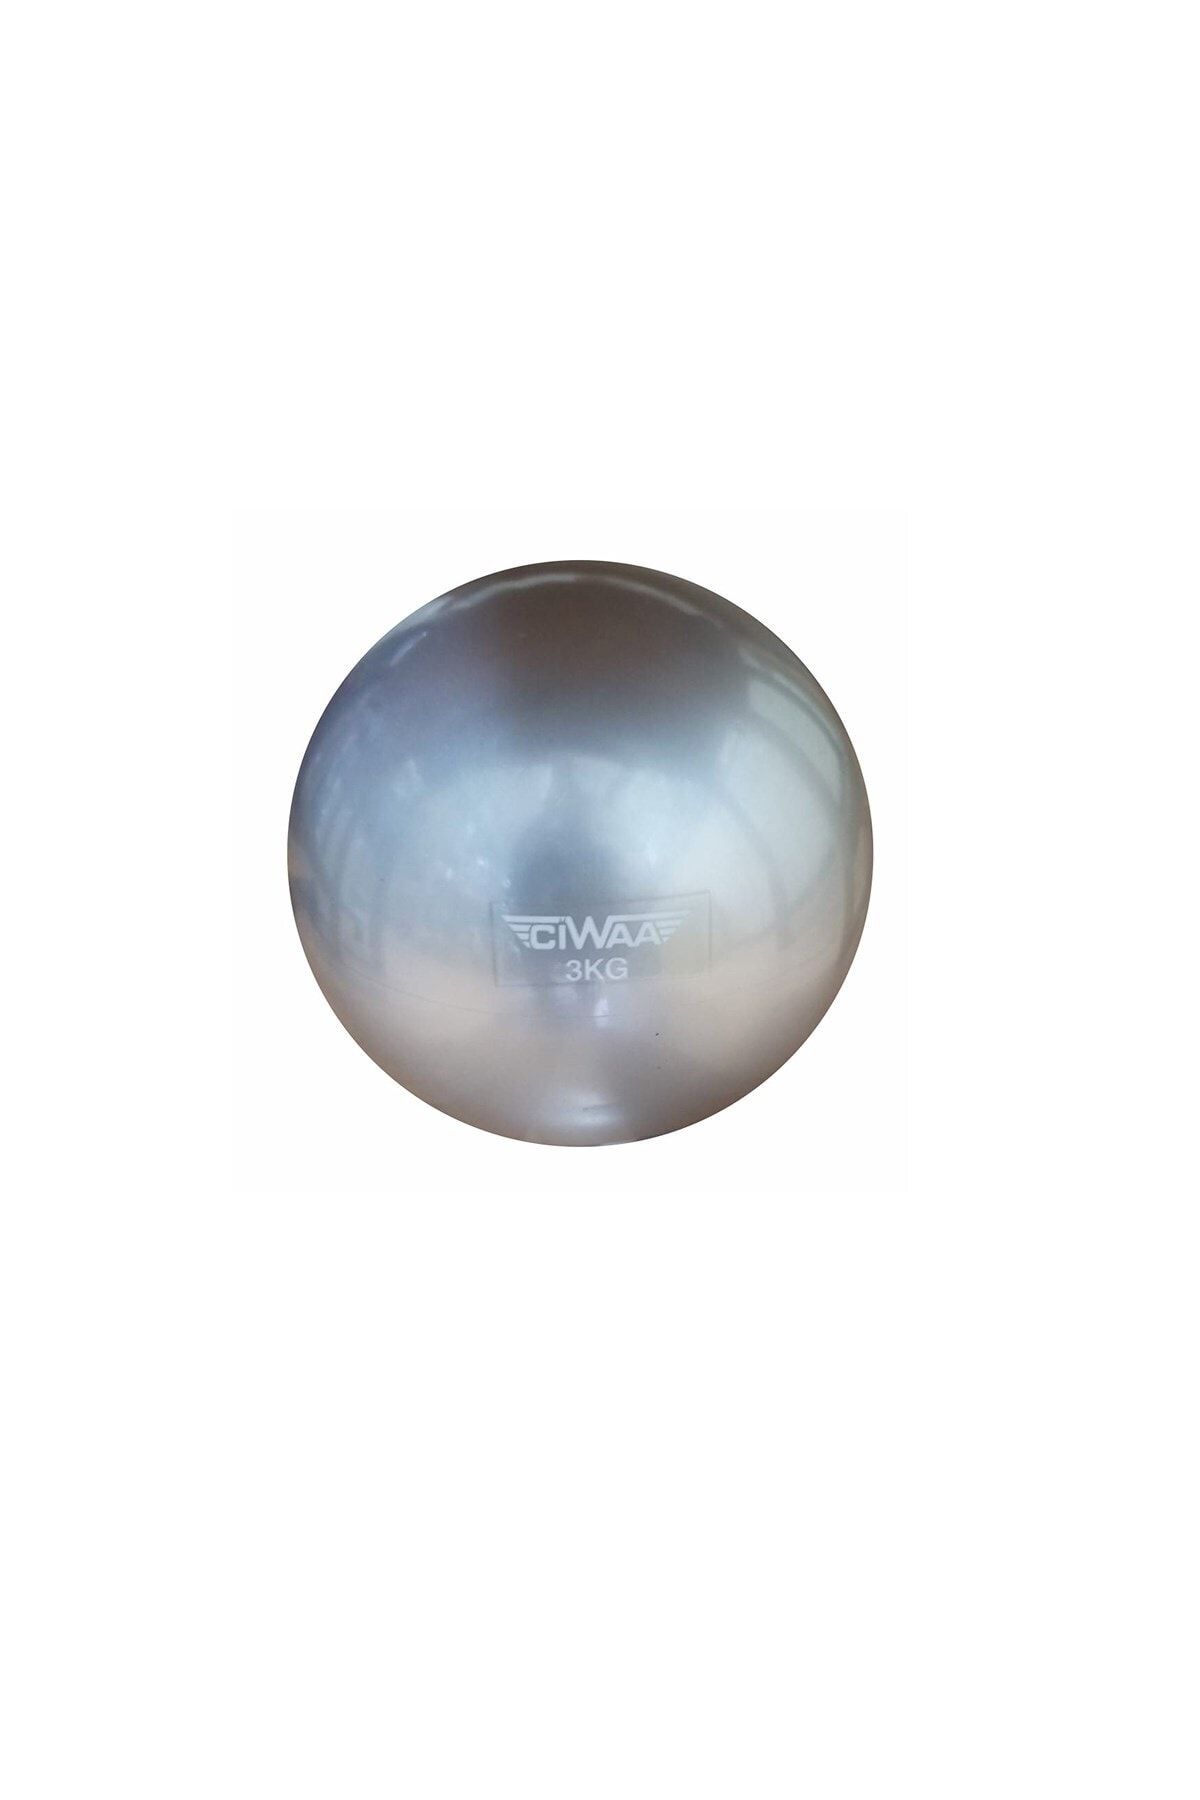 Ciwaa Cwa-939 Pilates Ağırlık Topu Pilates Toning Ball Denge Ve Ağırlık Topu 3 Kg